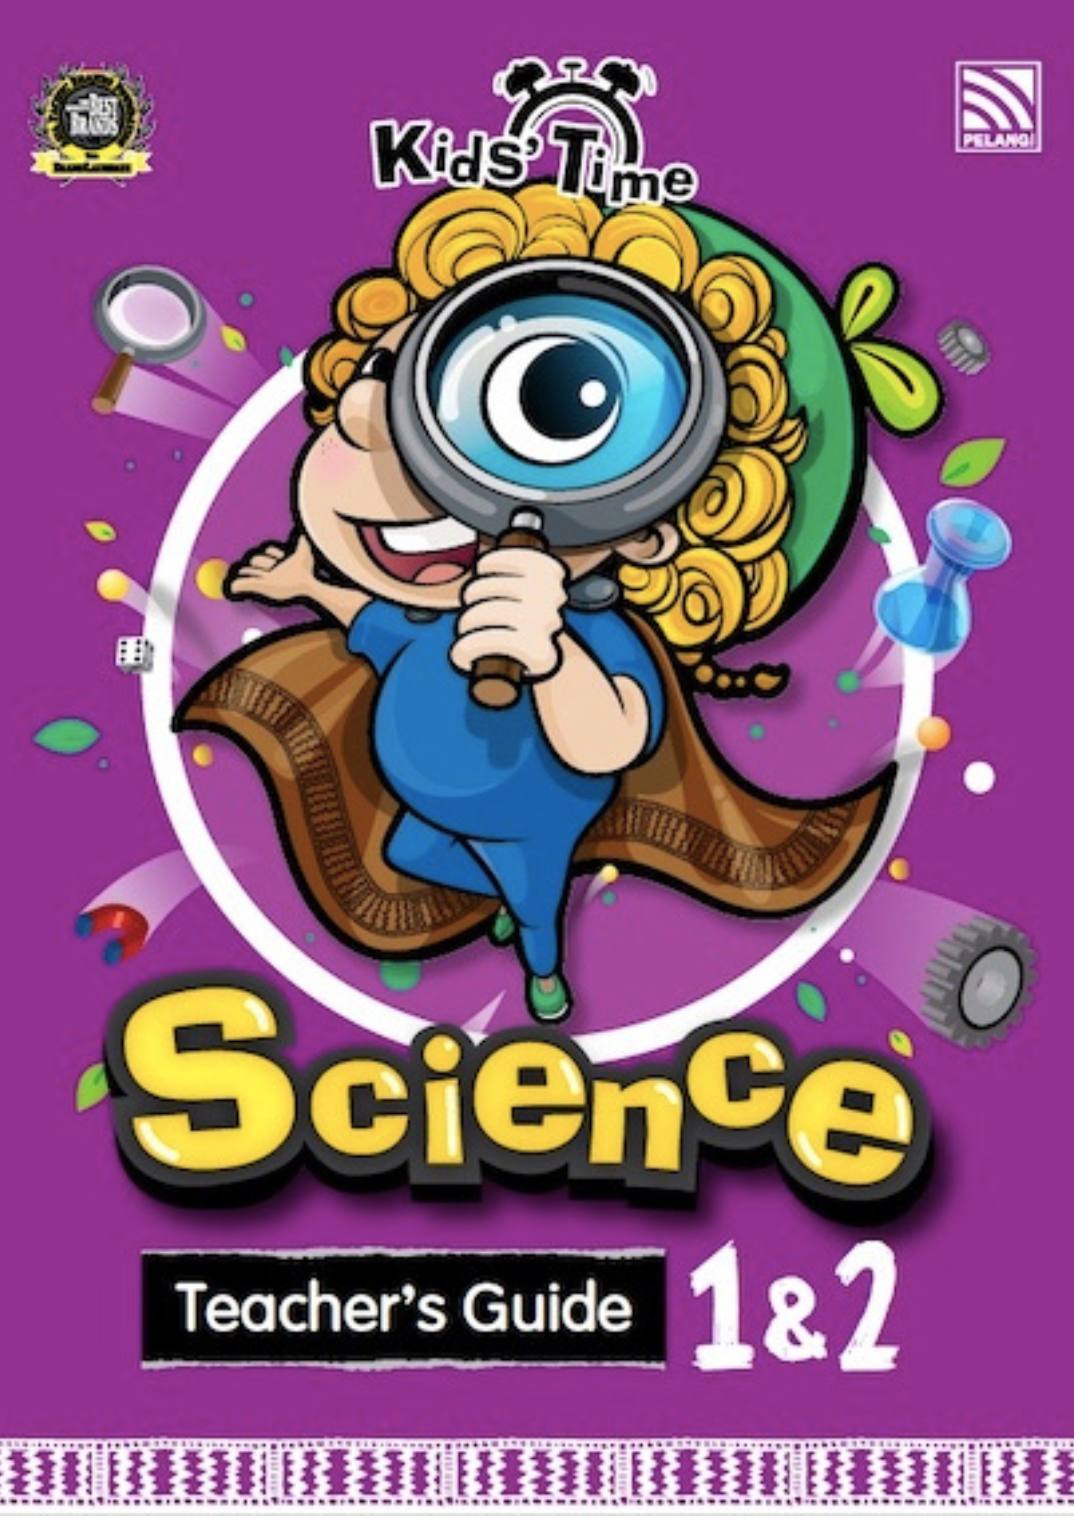 Pelangi Kids Time Science 1 & 2 Teacher Guide